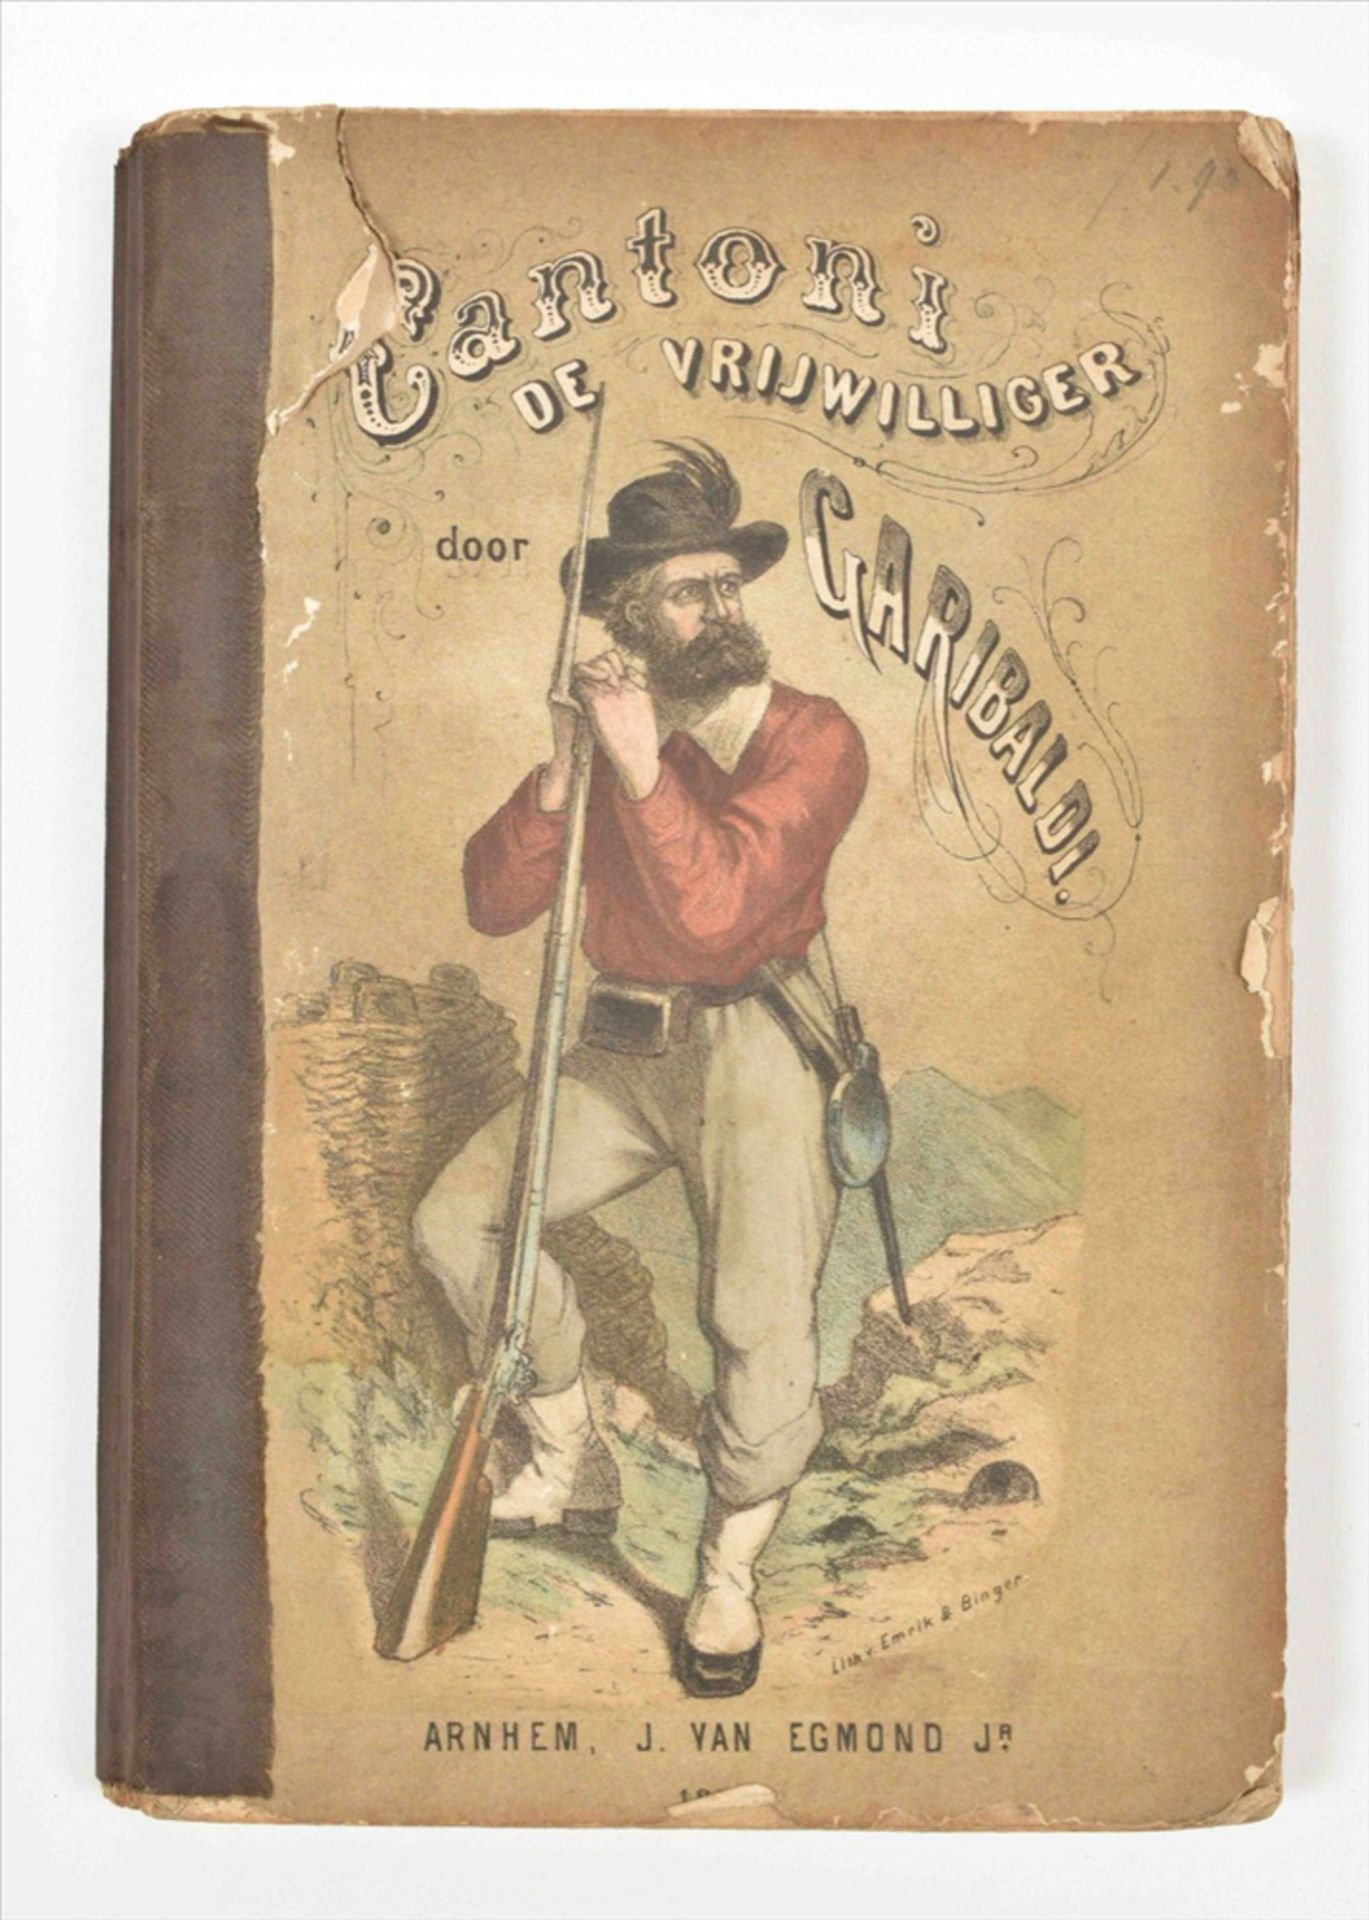 [Italian literature] Giuseppe Garibaldi. Cantoni de vrijwilliger